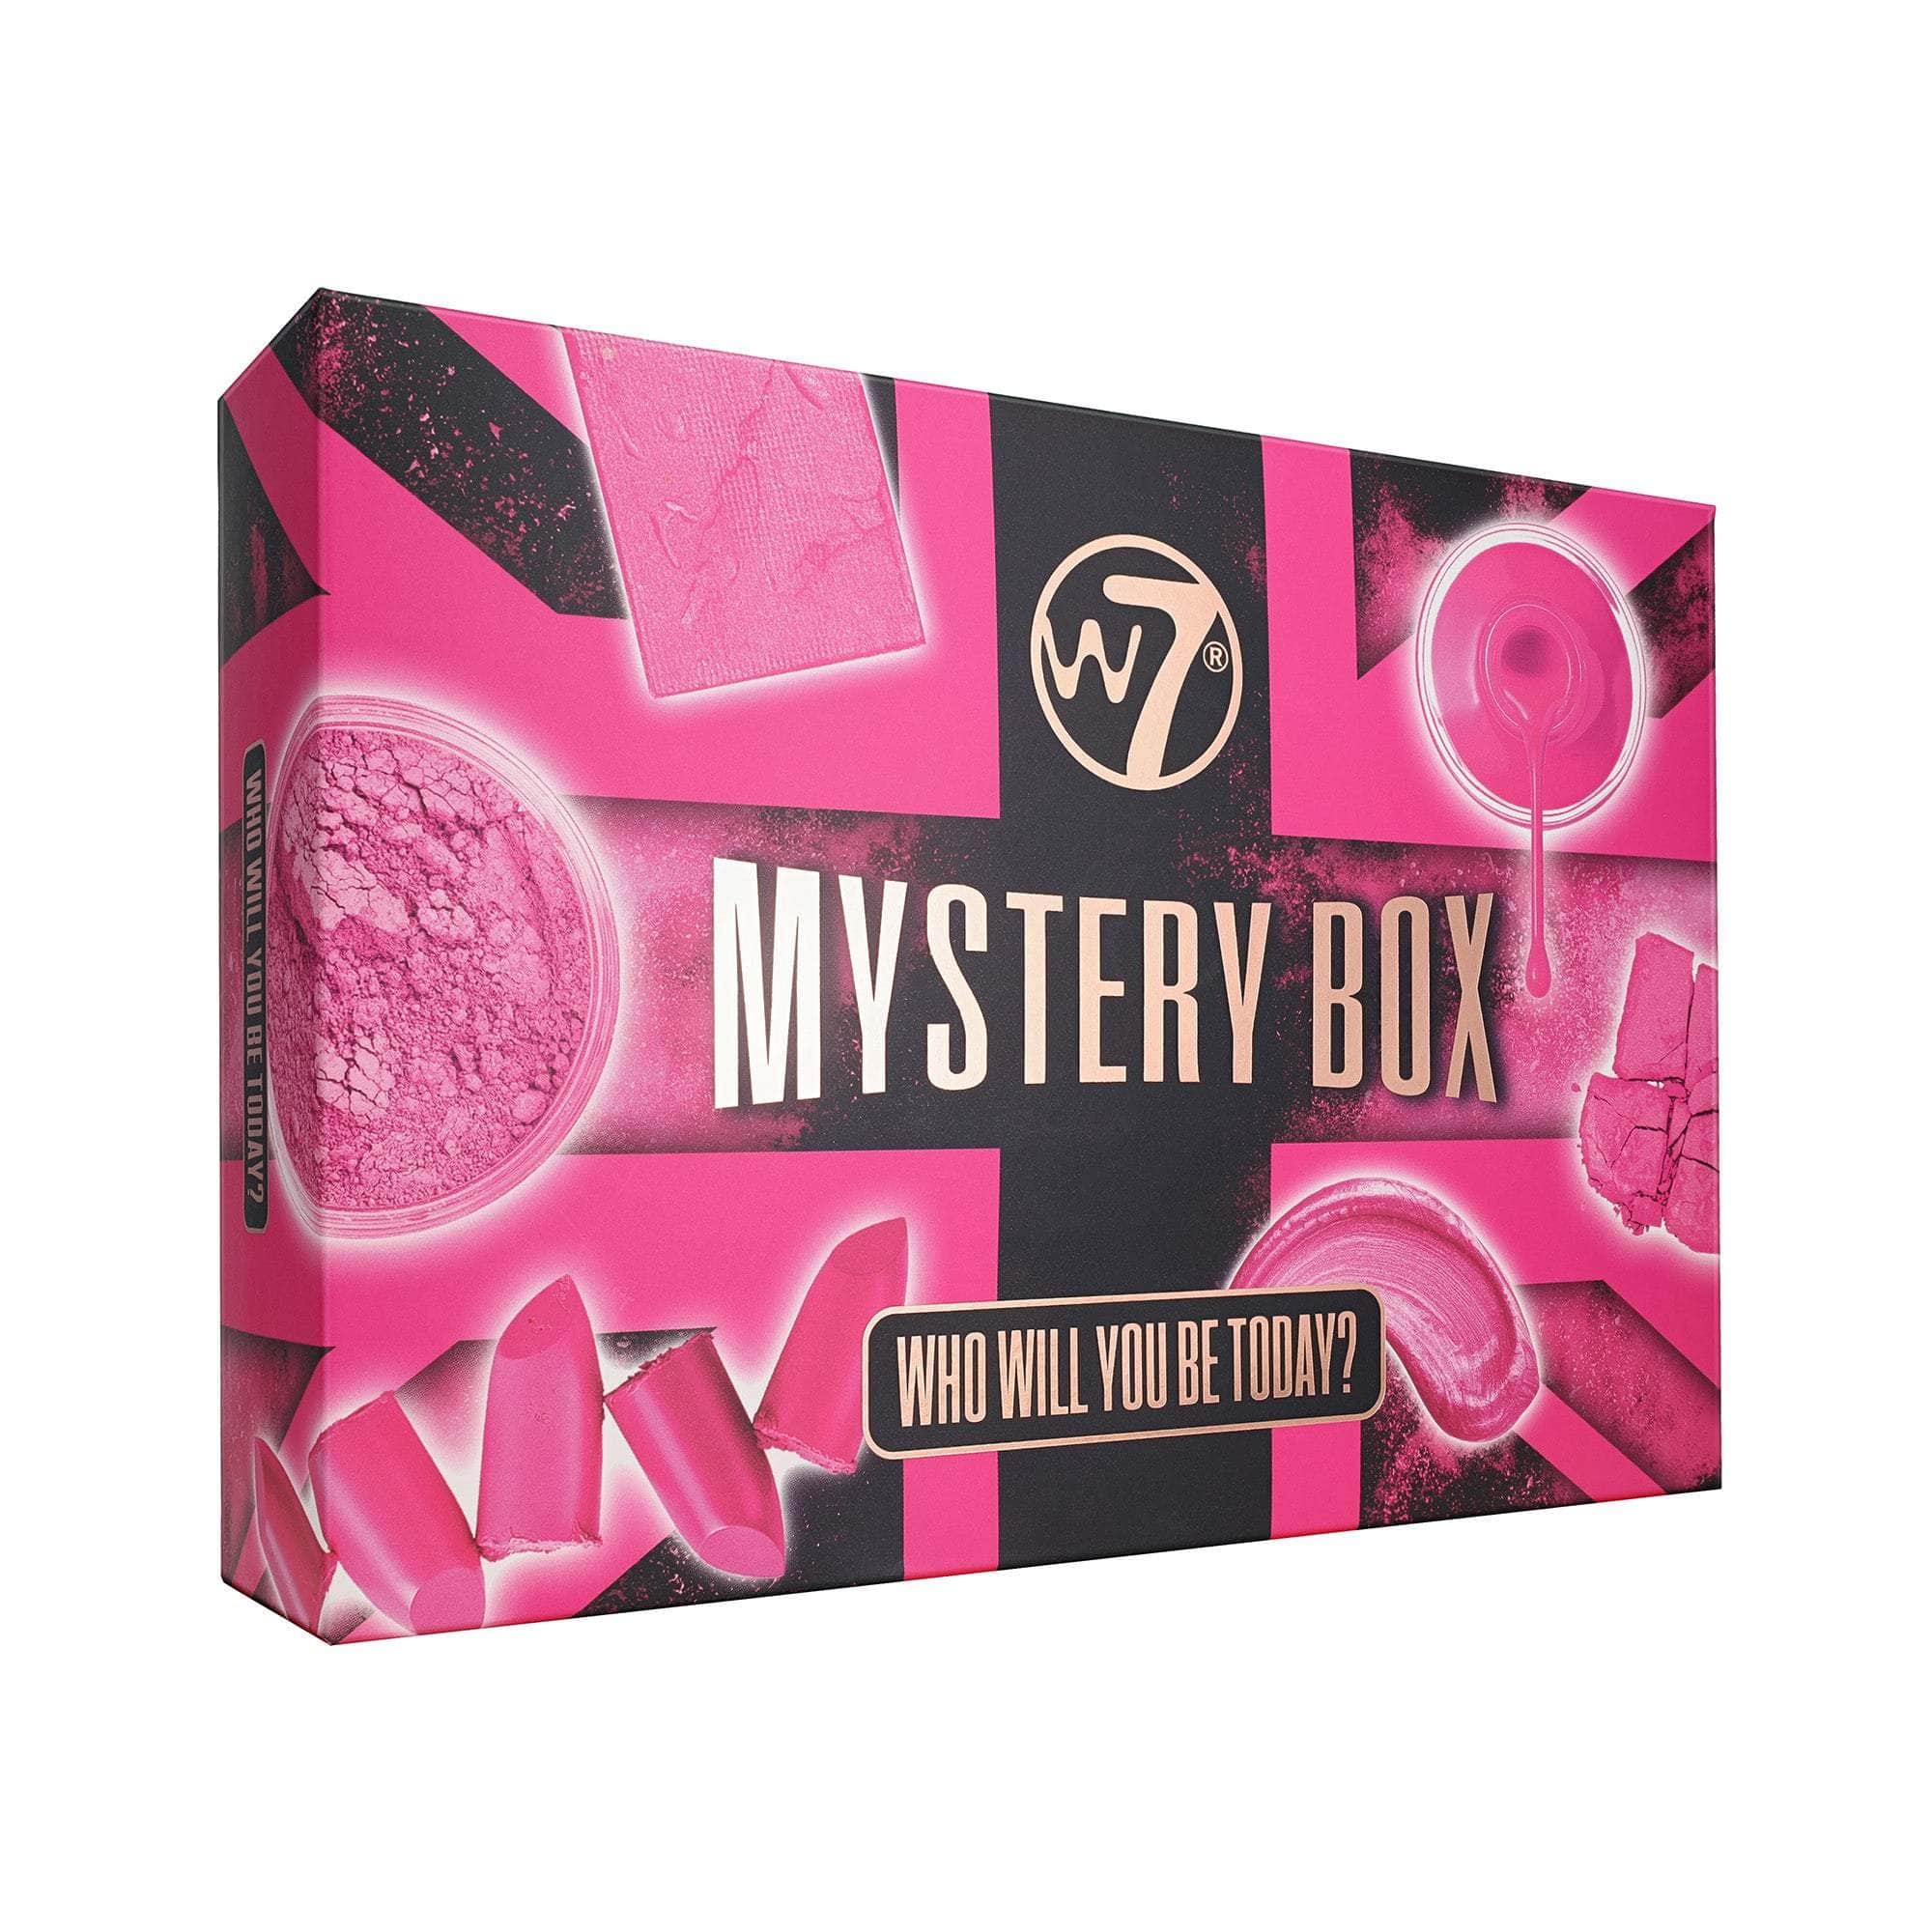 Mystery Makeup Cosmetics Box, Mystery Box